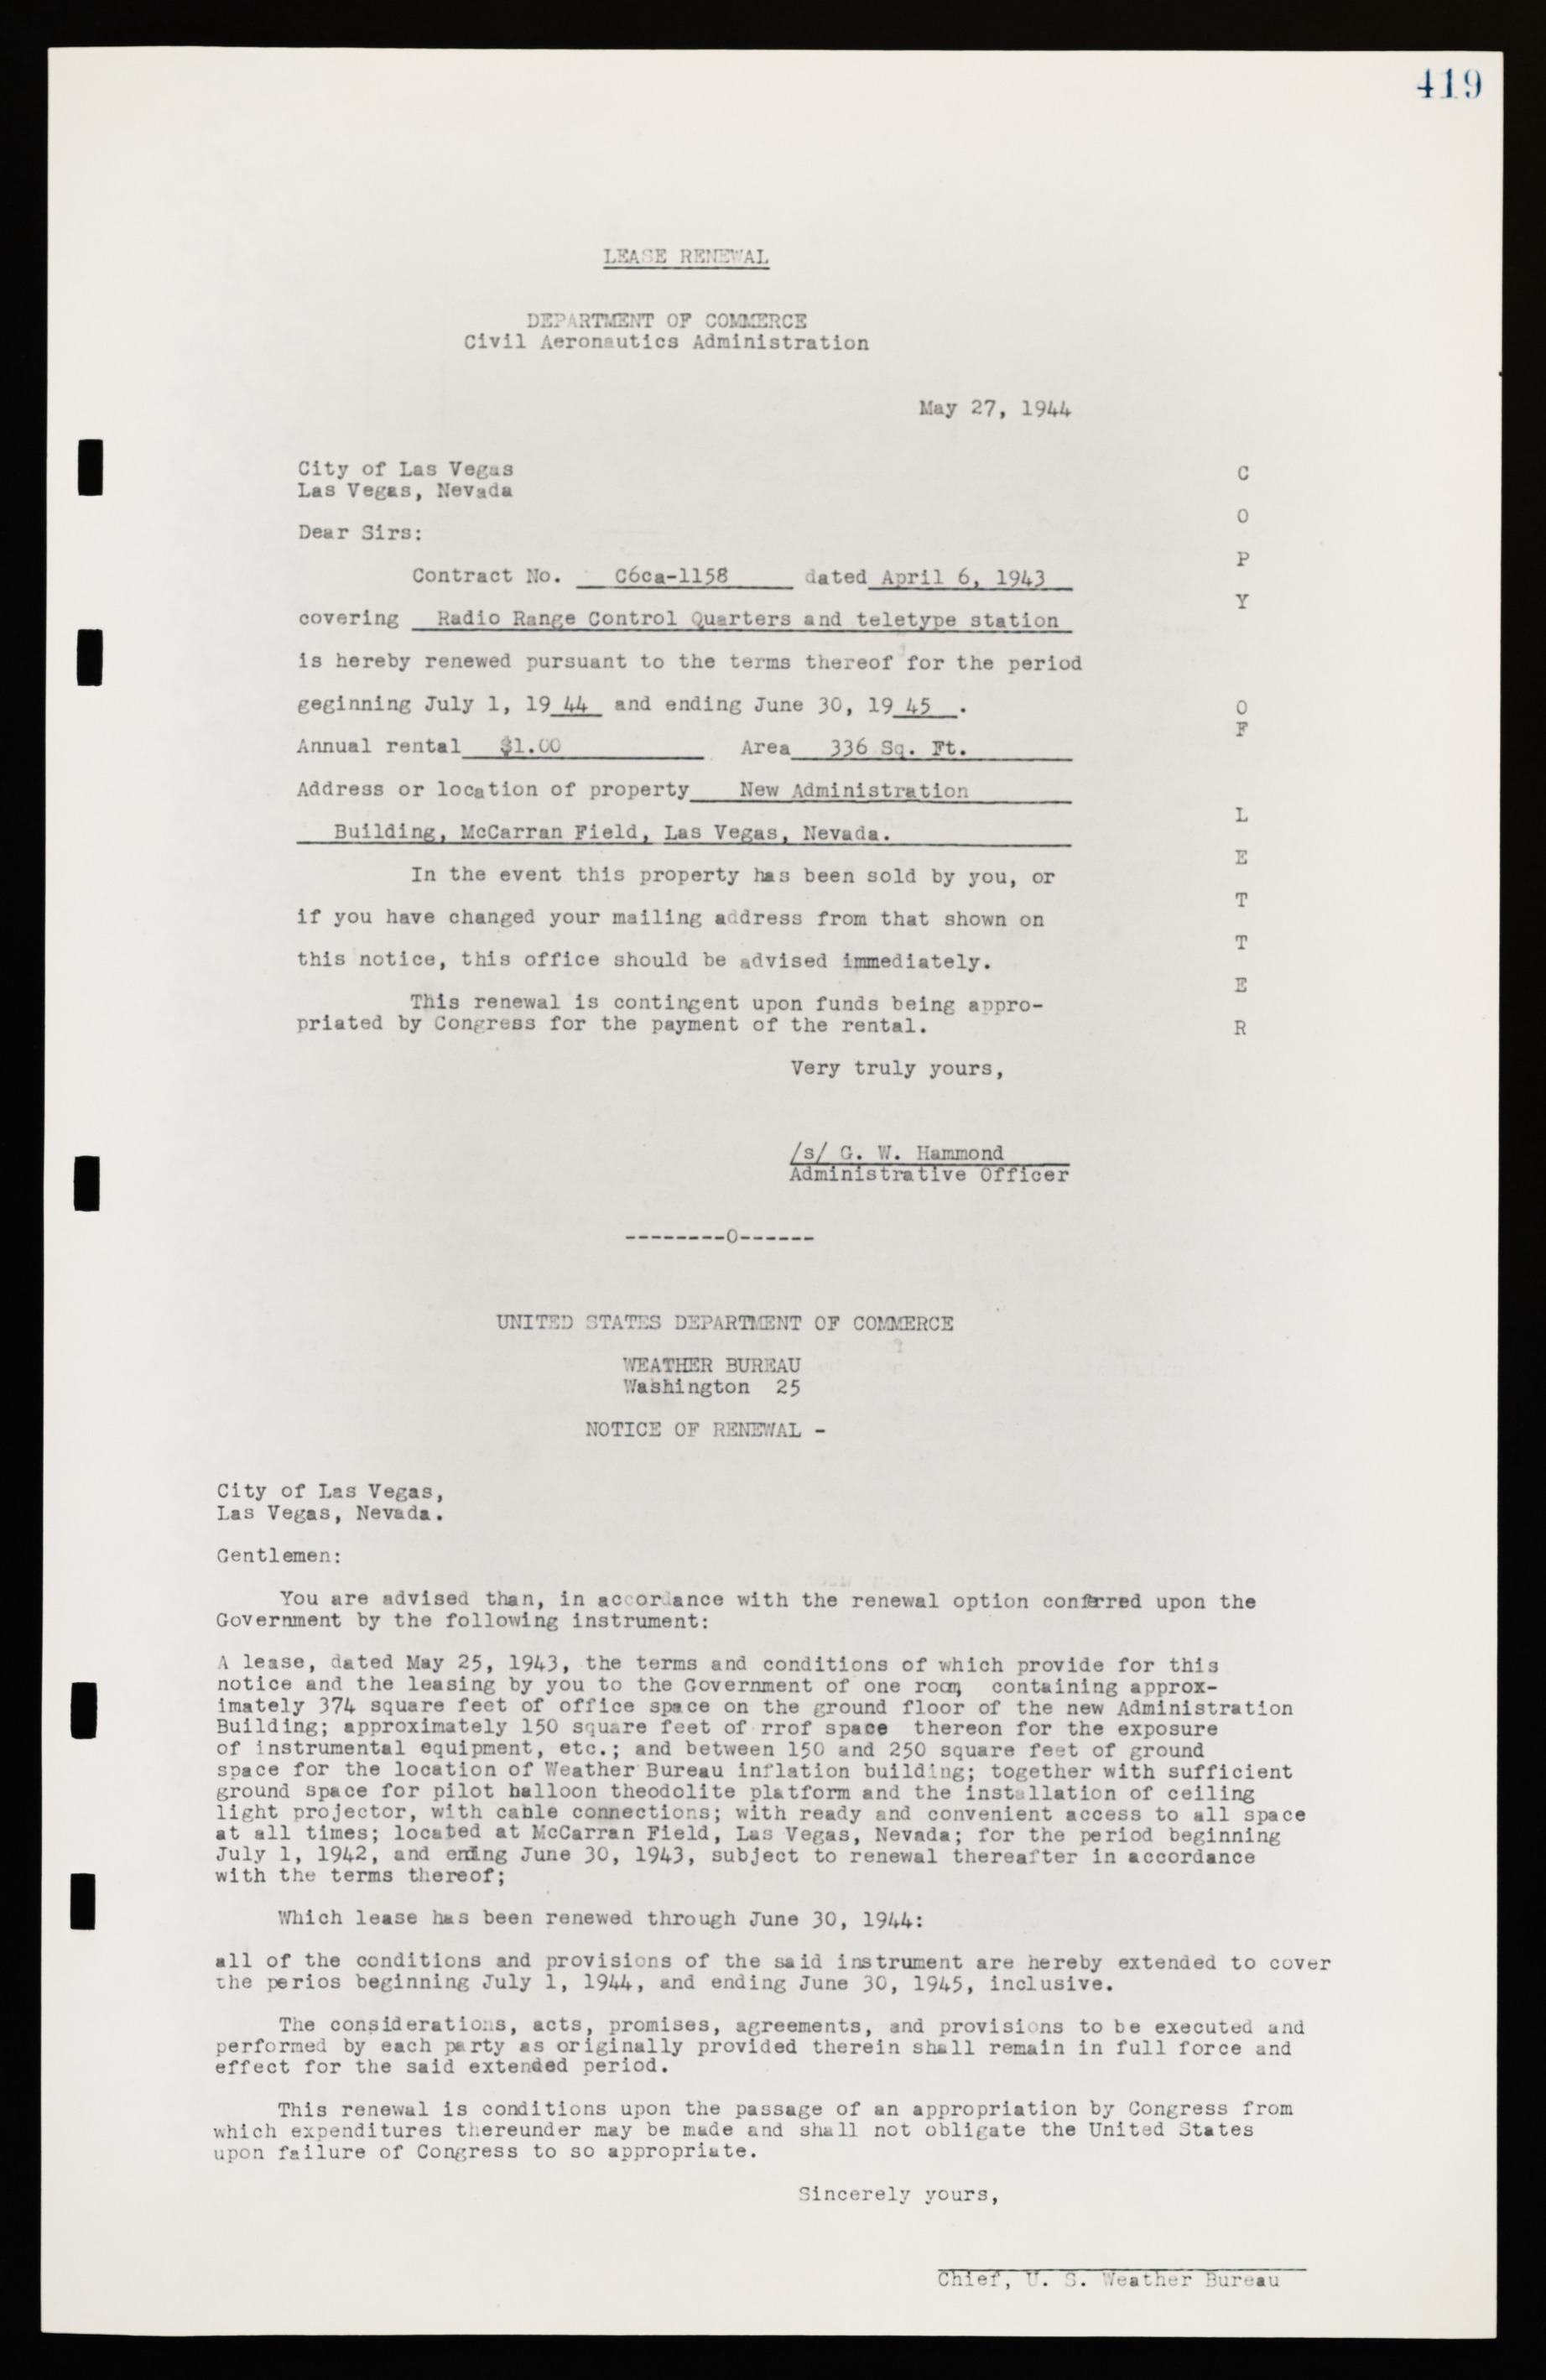 Las Vegas City Commission Legal Documents, February 29, 1944 to February 21, 1945, lvc000016-112